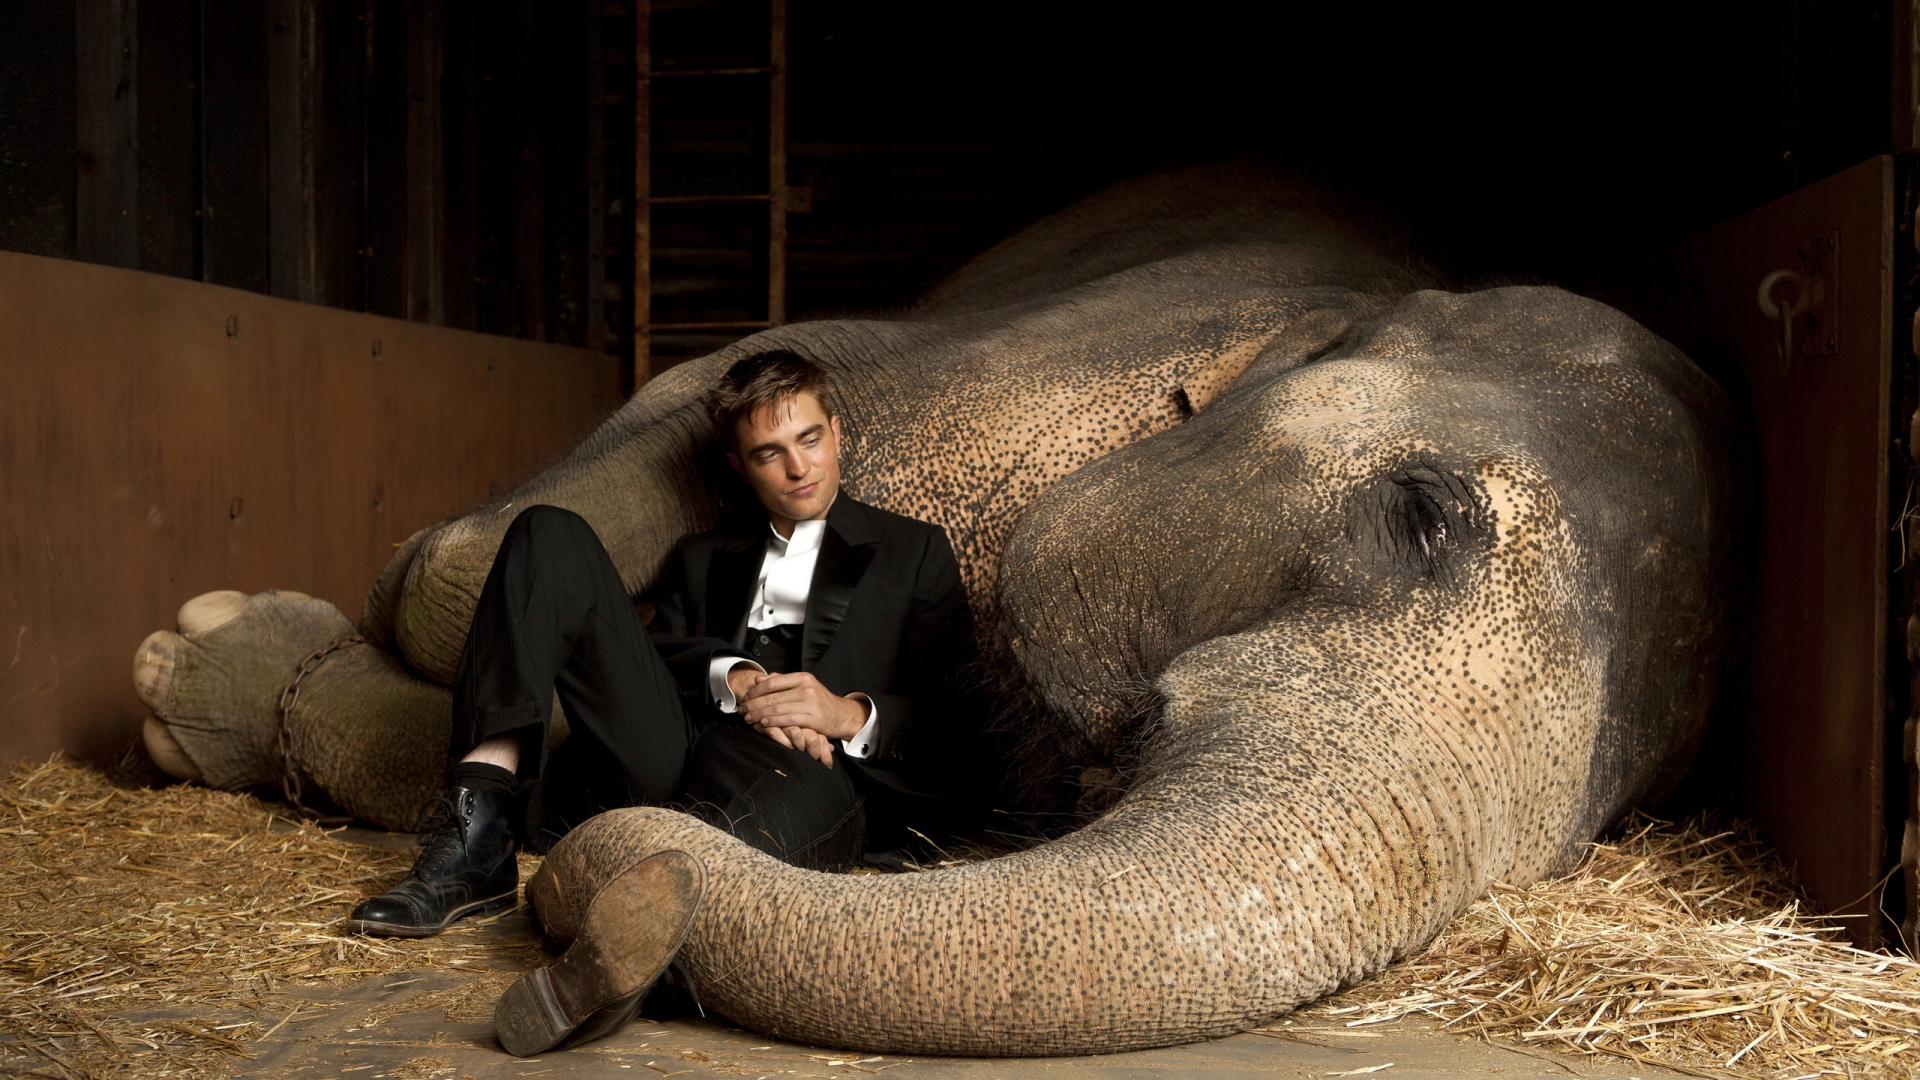 Robert Pattinson Close to Elephant for 1920 x 1080 HDTV 1080p resolution